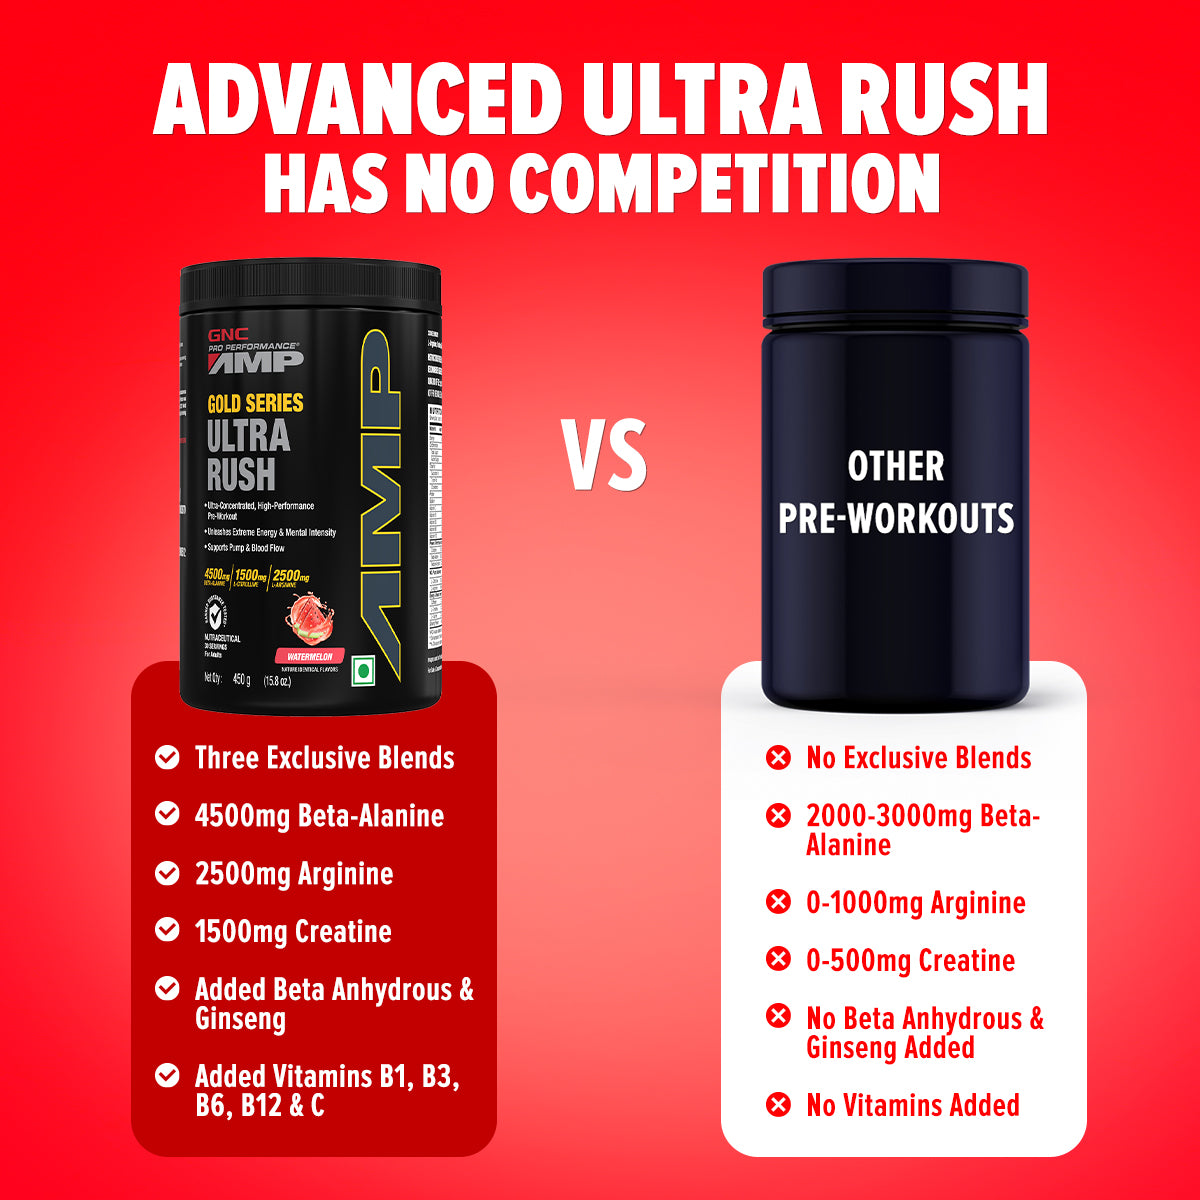 GNC AMP Gold Series Ultra Rush - Extreme Energy, Powerful Pump & Deep Focus